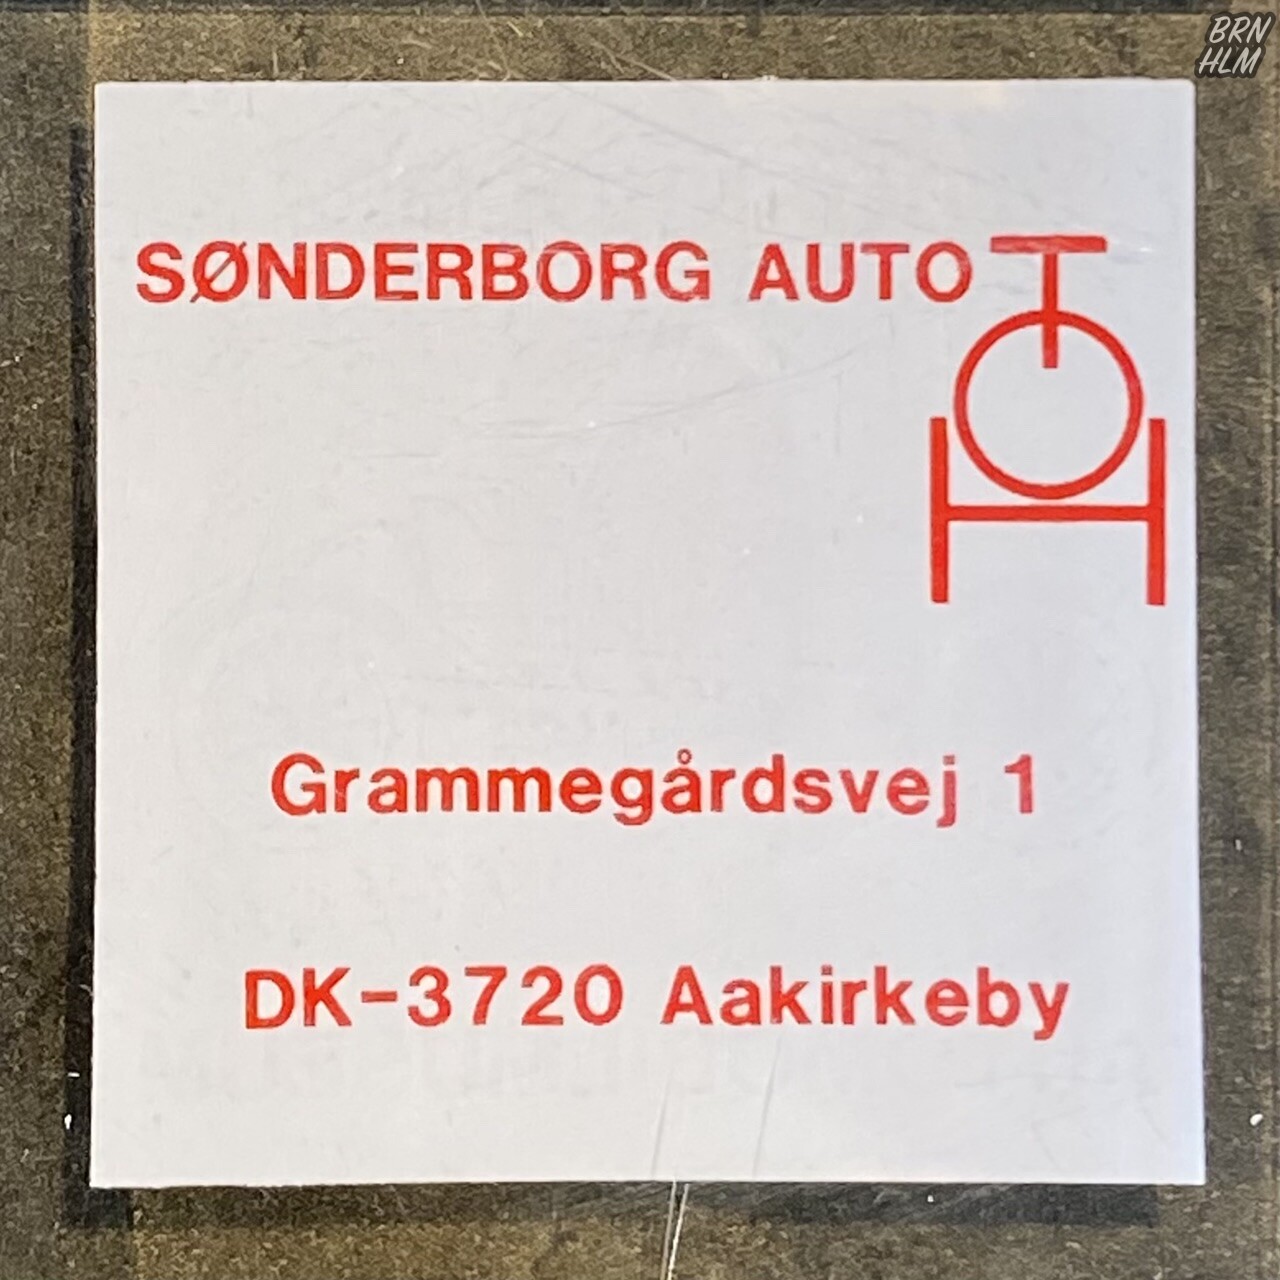 Sønderborg Auto - Lada forhandler